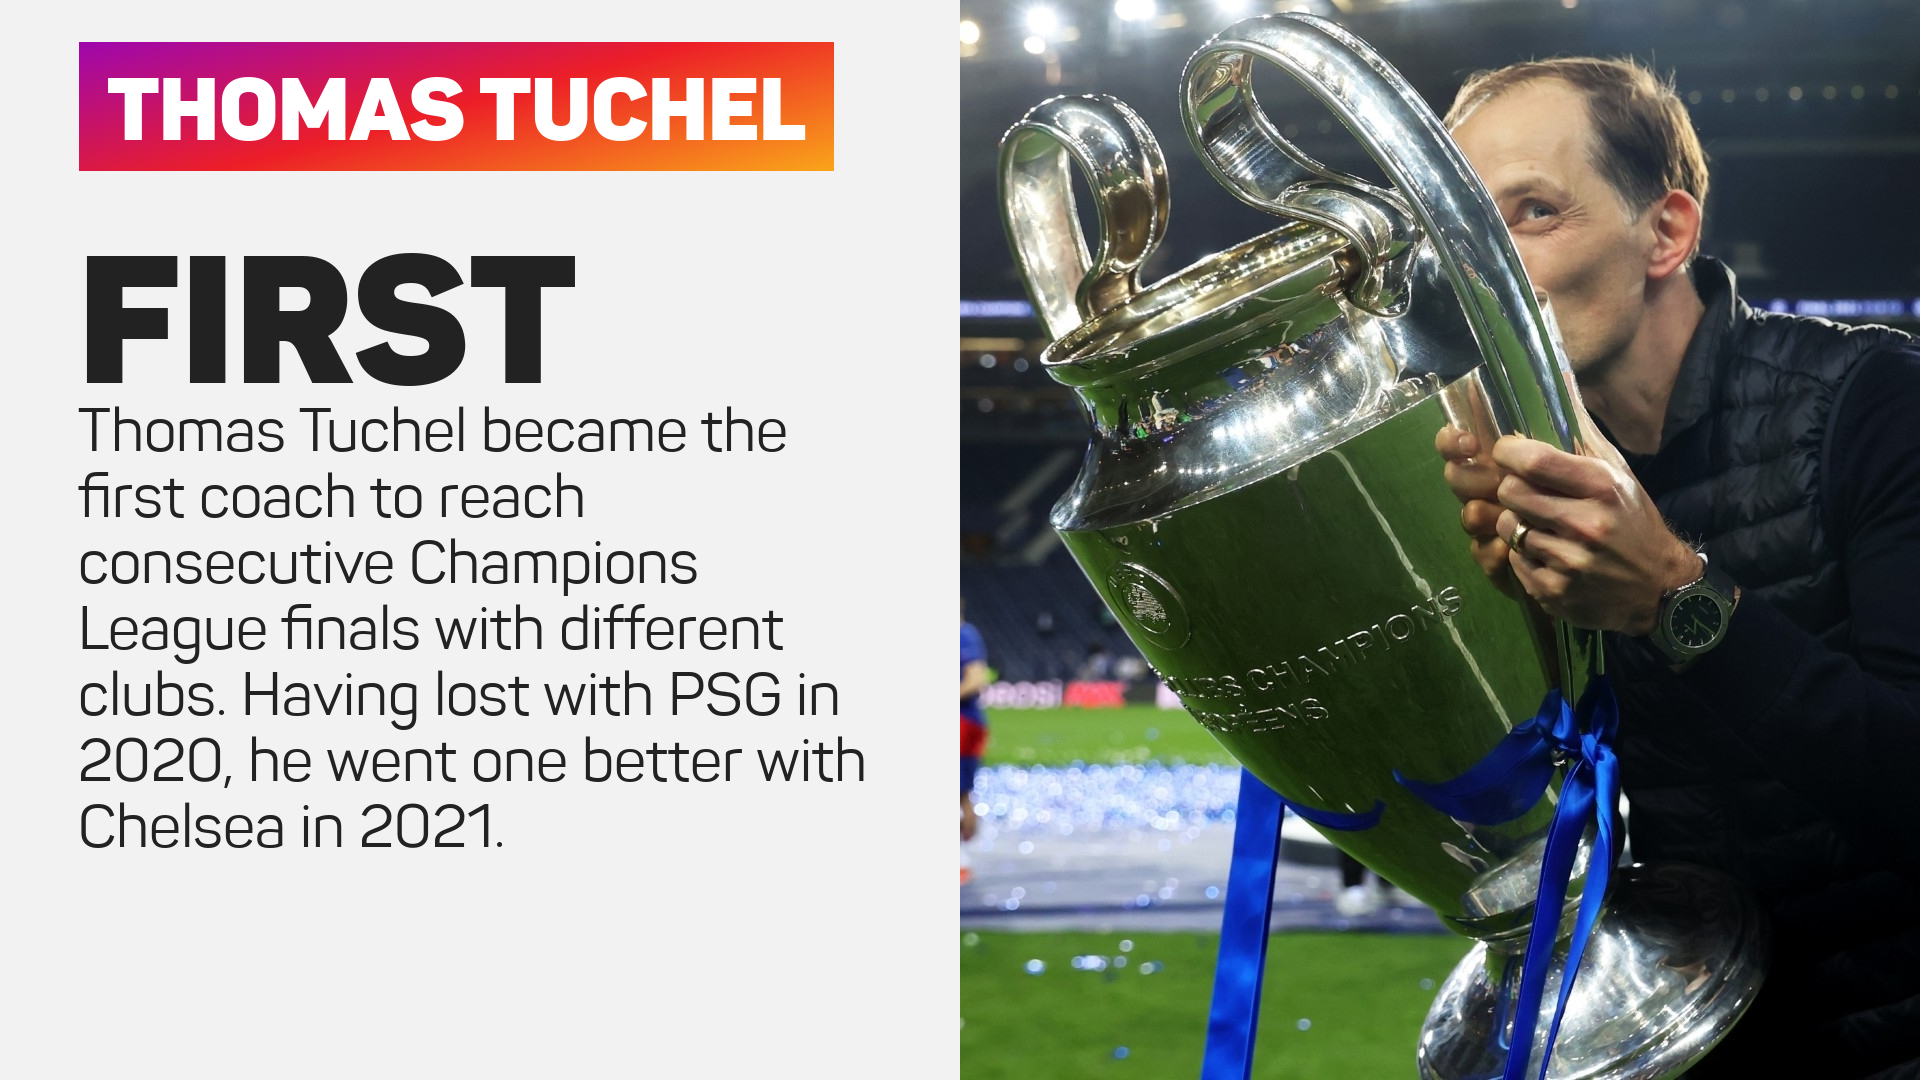 Thomas Tuchel consecutive Champions League finals